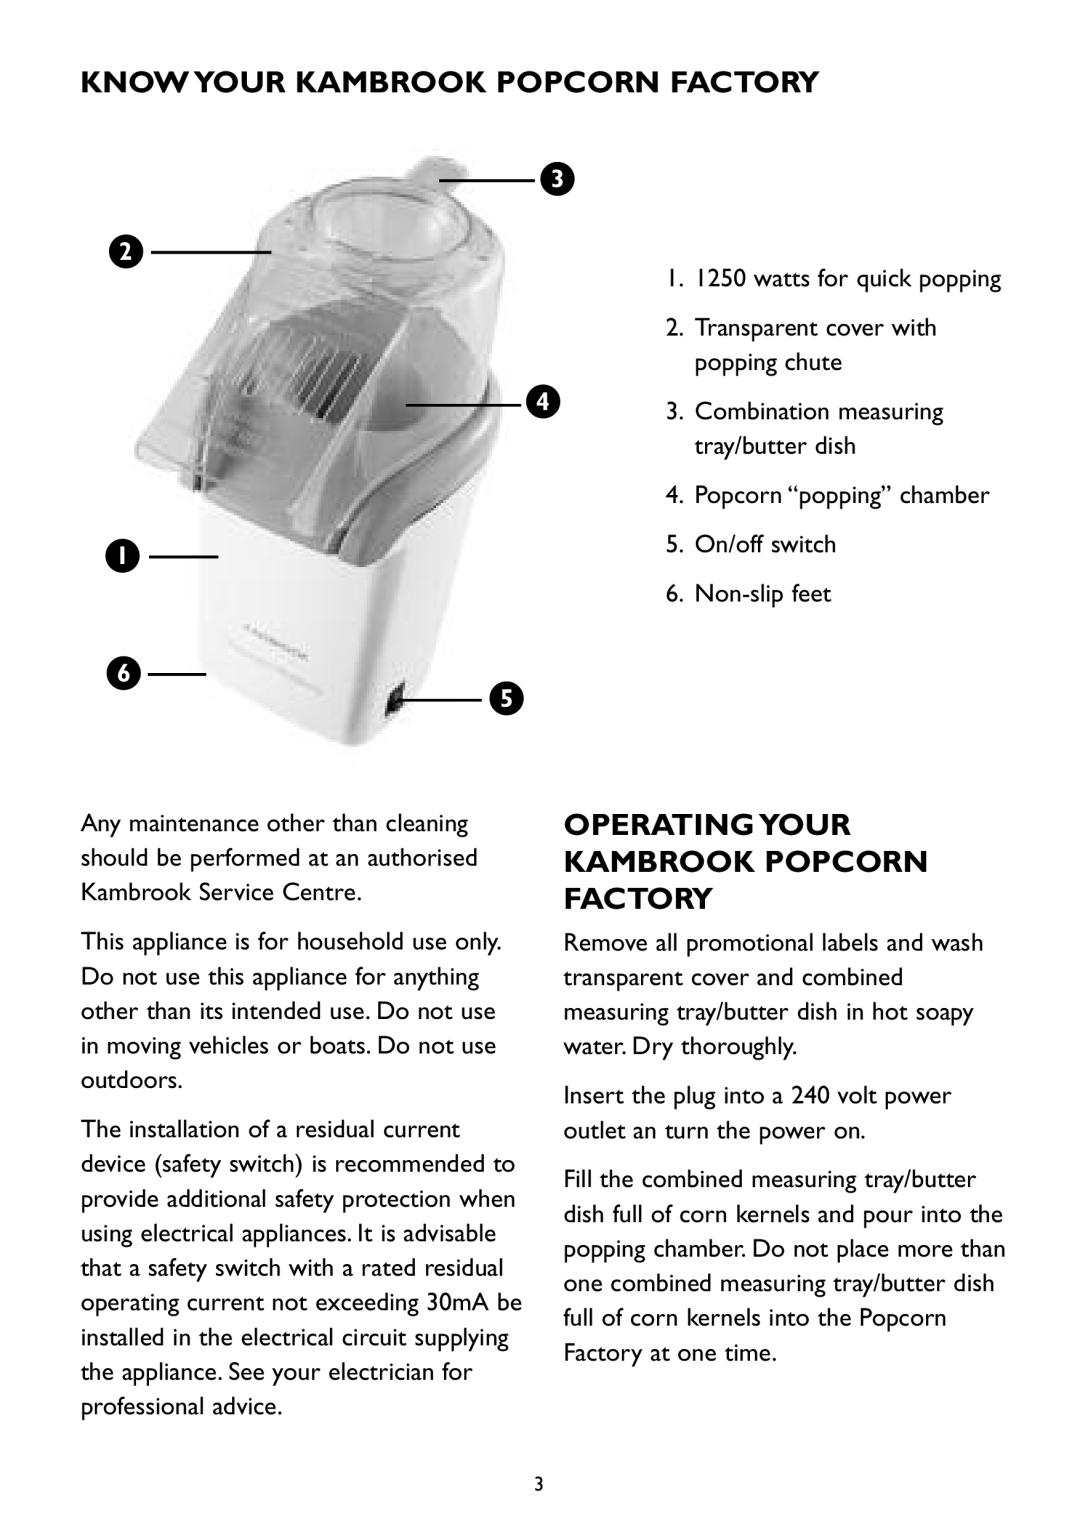 Kambrook KPC10 manual Know Your Kambrook Popcorn Factory, Operating Your Kambrook Popcorn Factory, Non-slip feet 